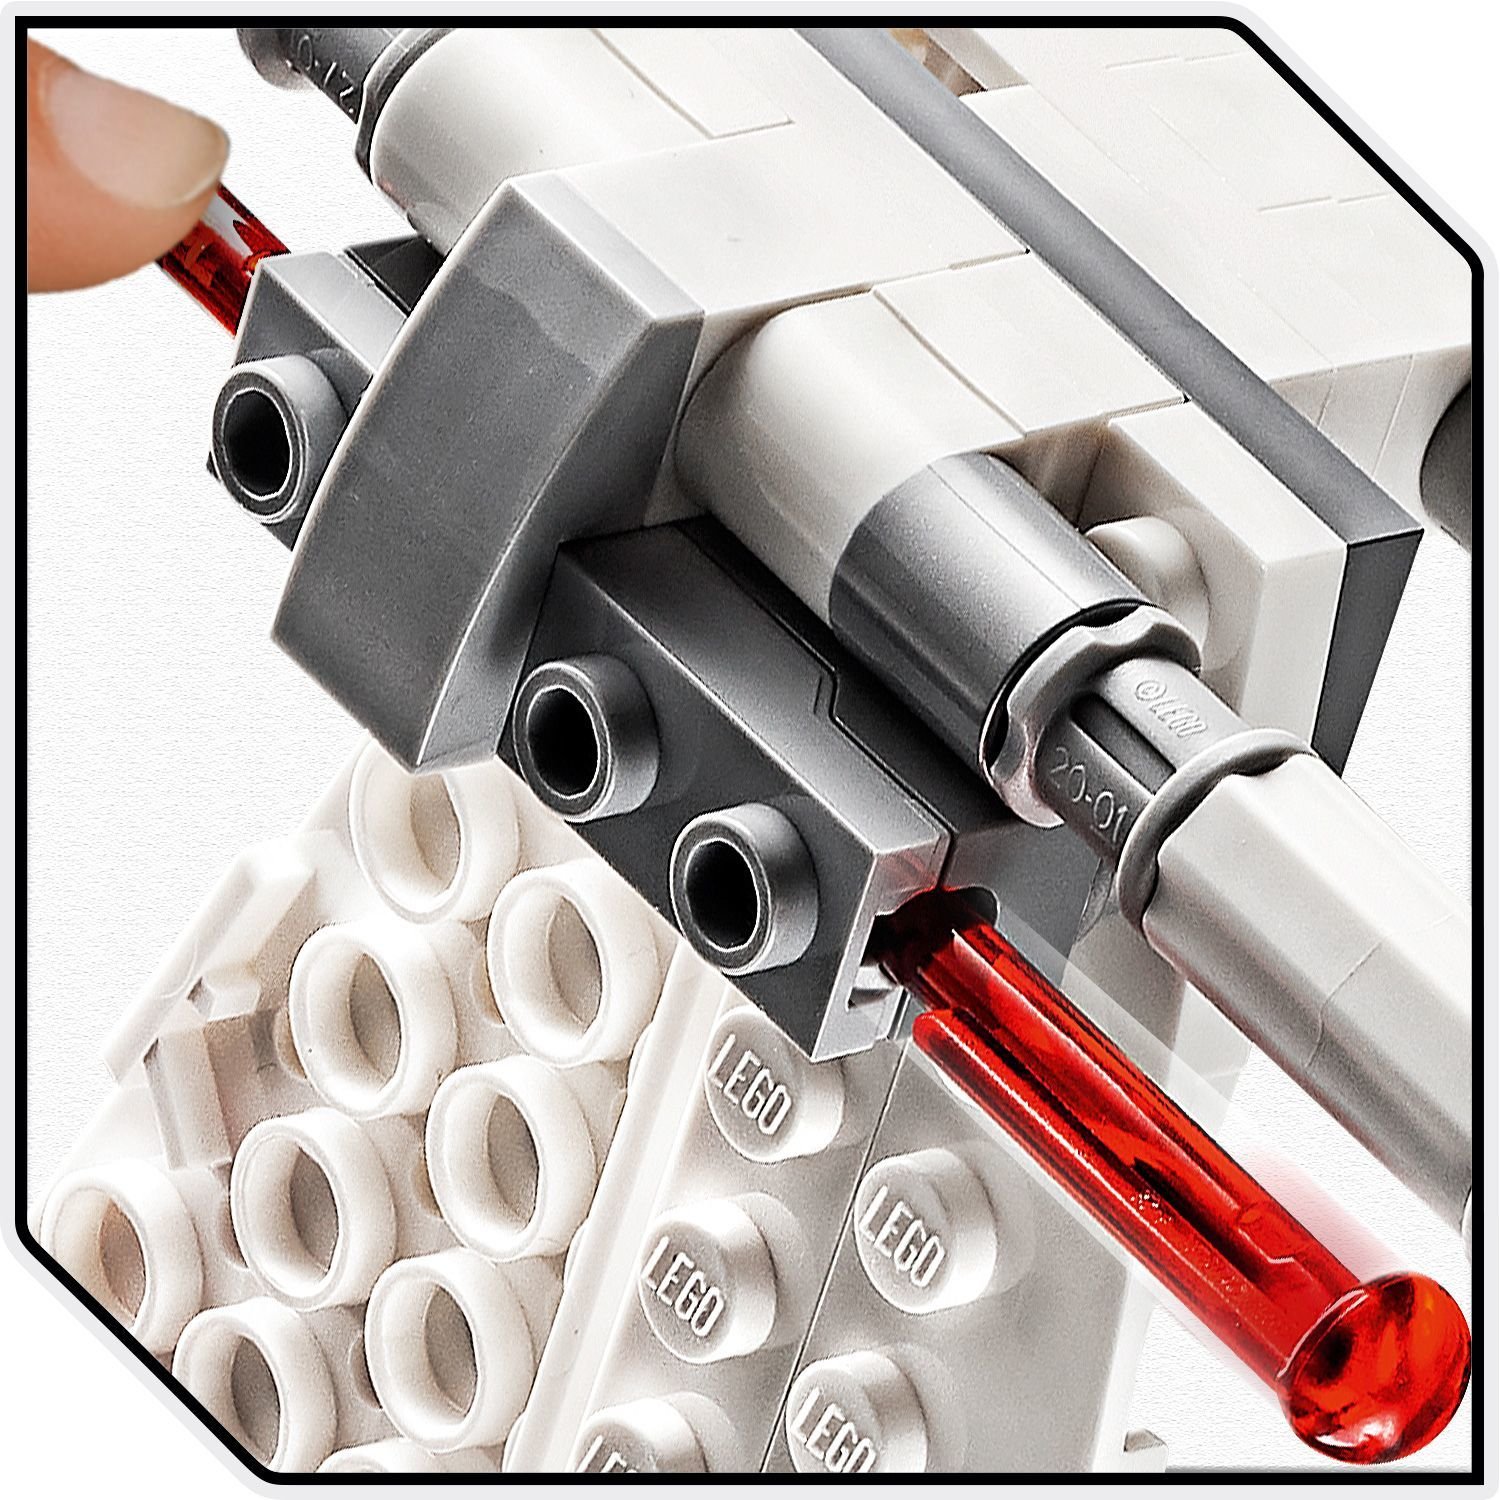 Lego Star Wars 75273 Истребитель типа Х По Дамерона